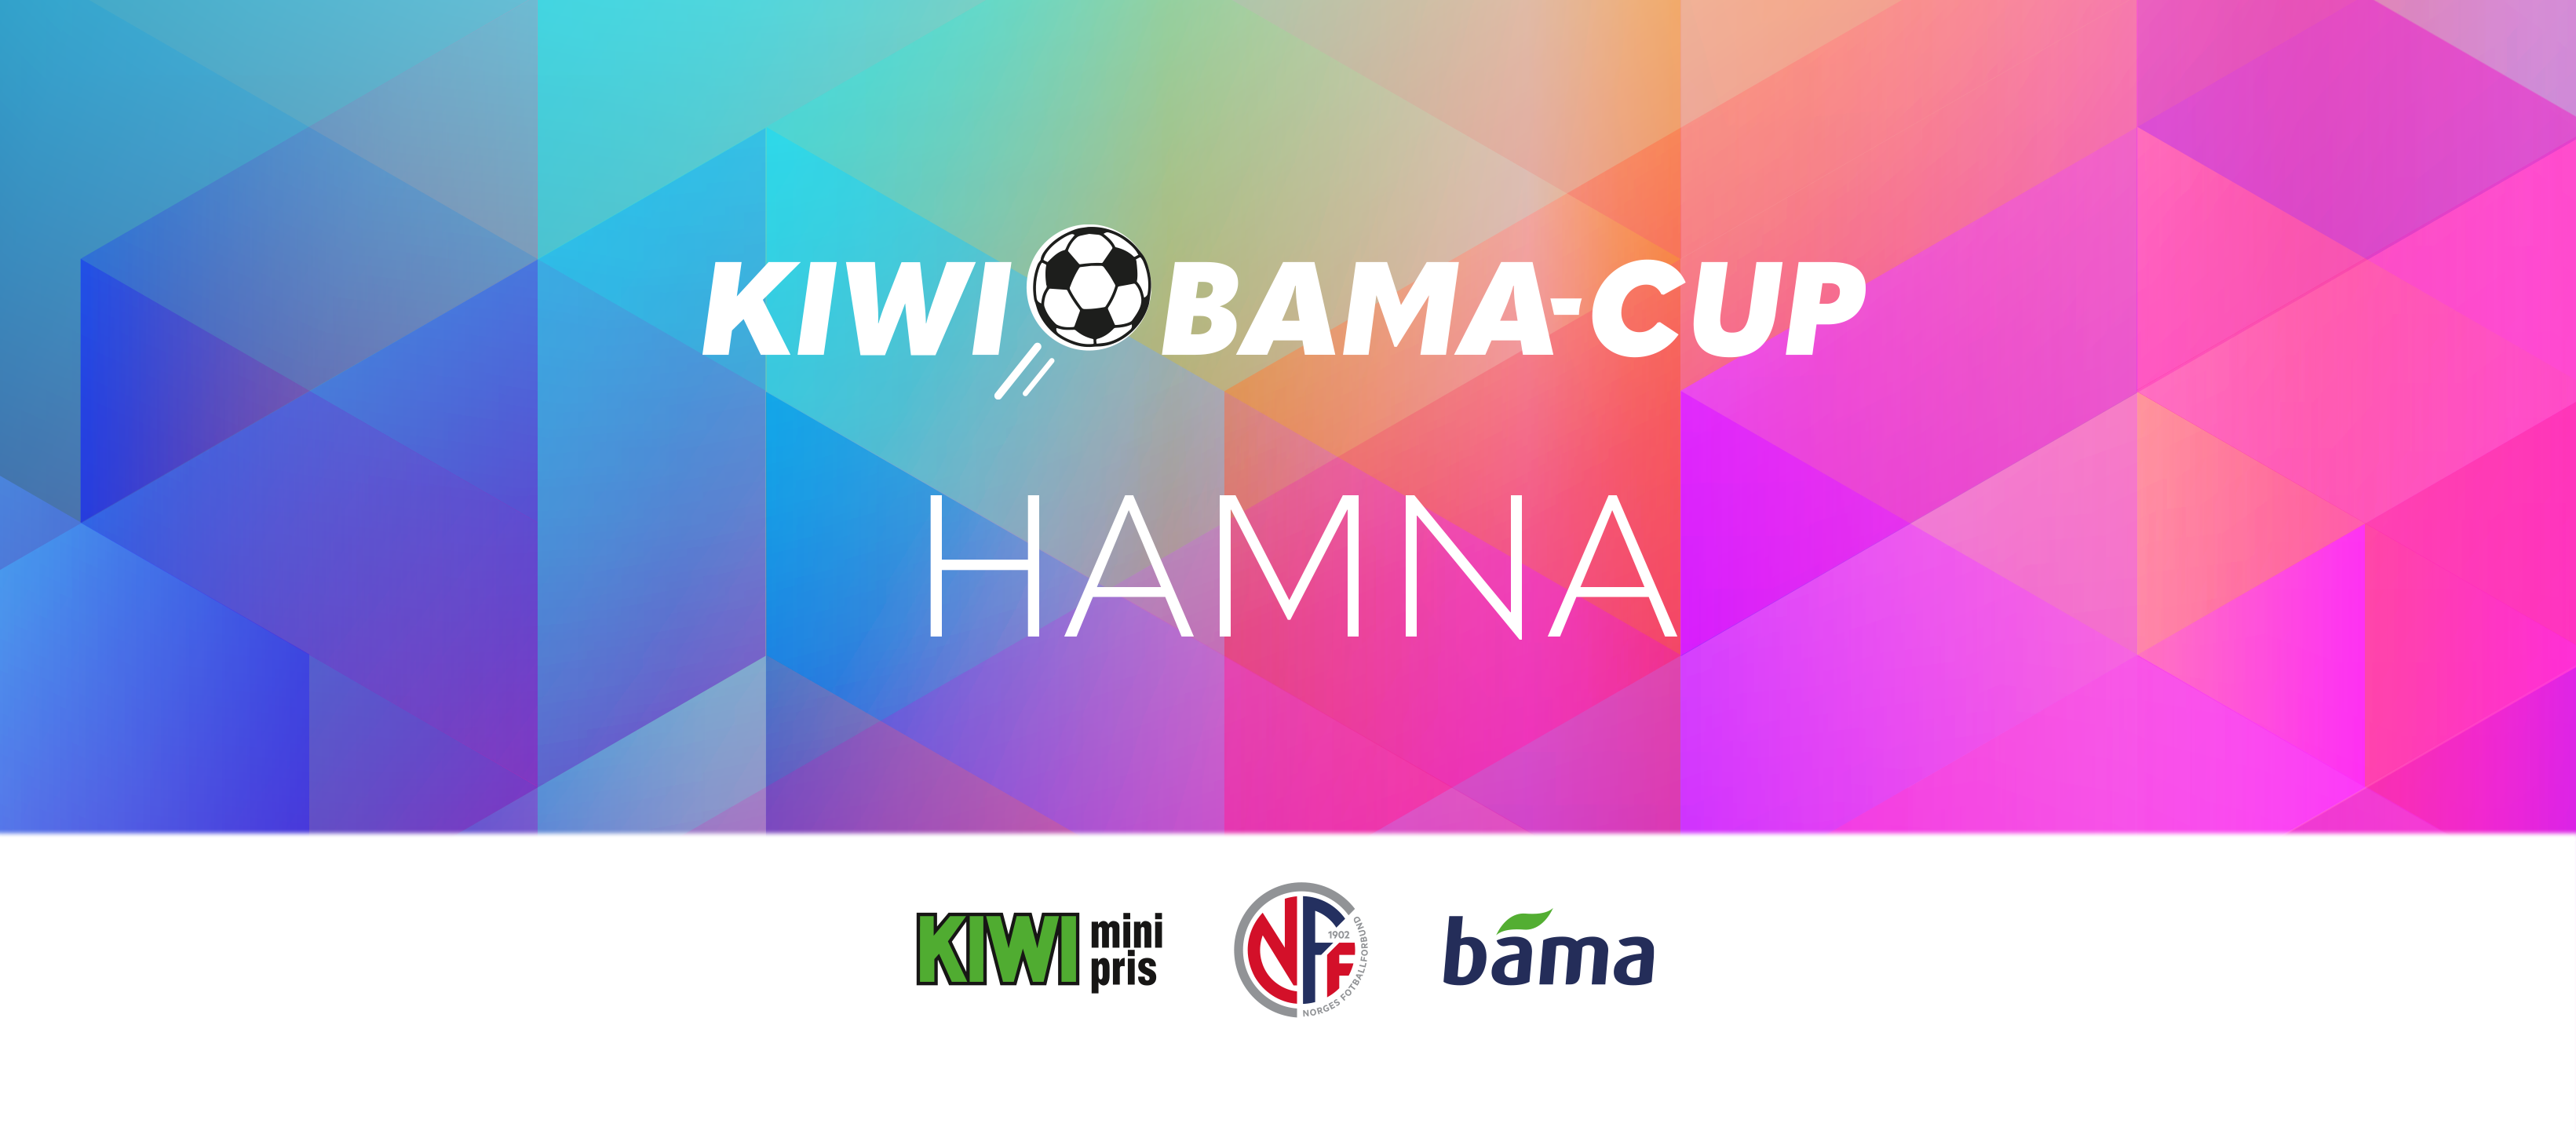 FB-BANNER KIWI-BAMA-Cup - Hamna.png